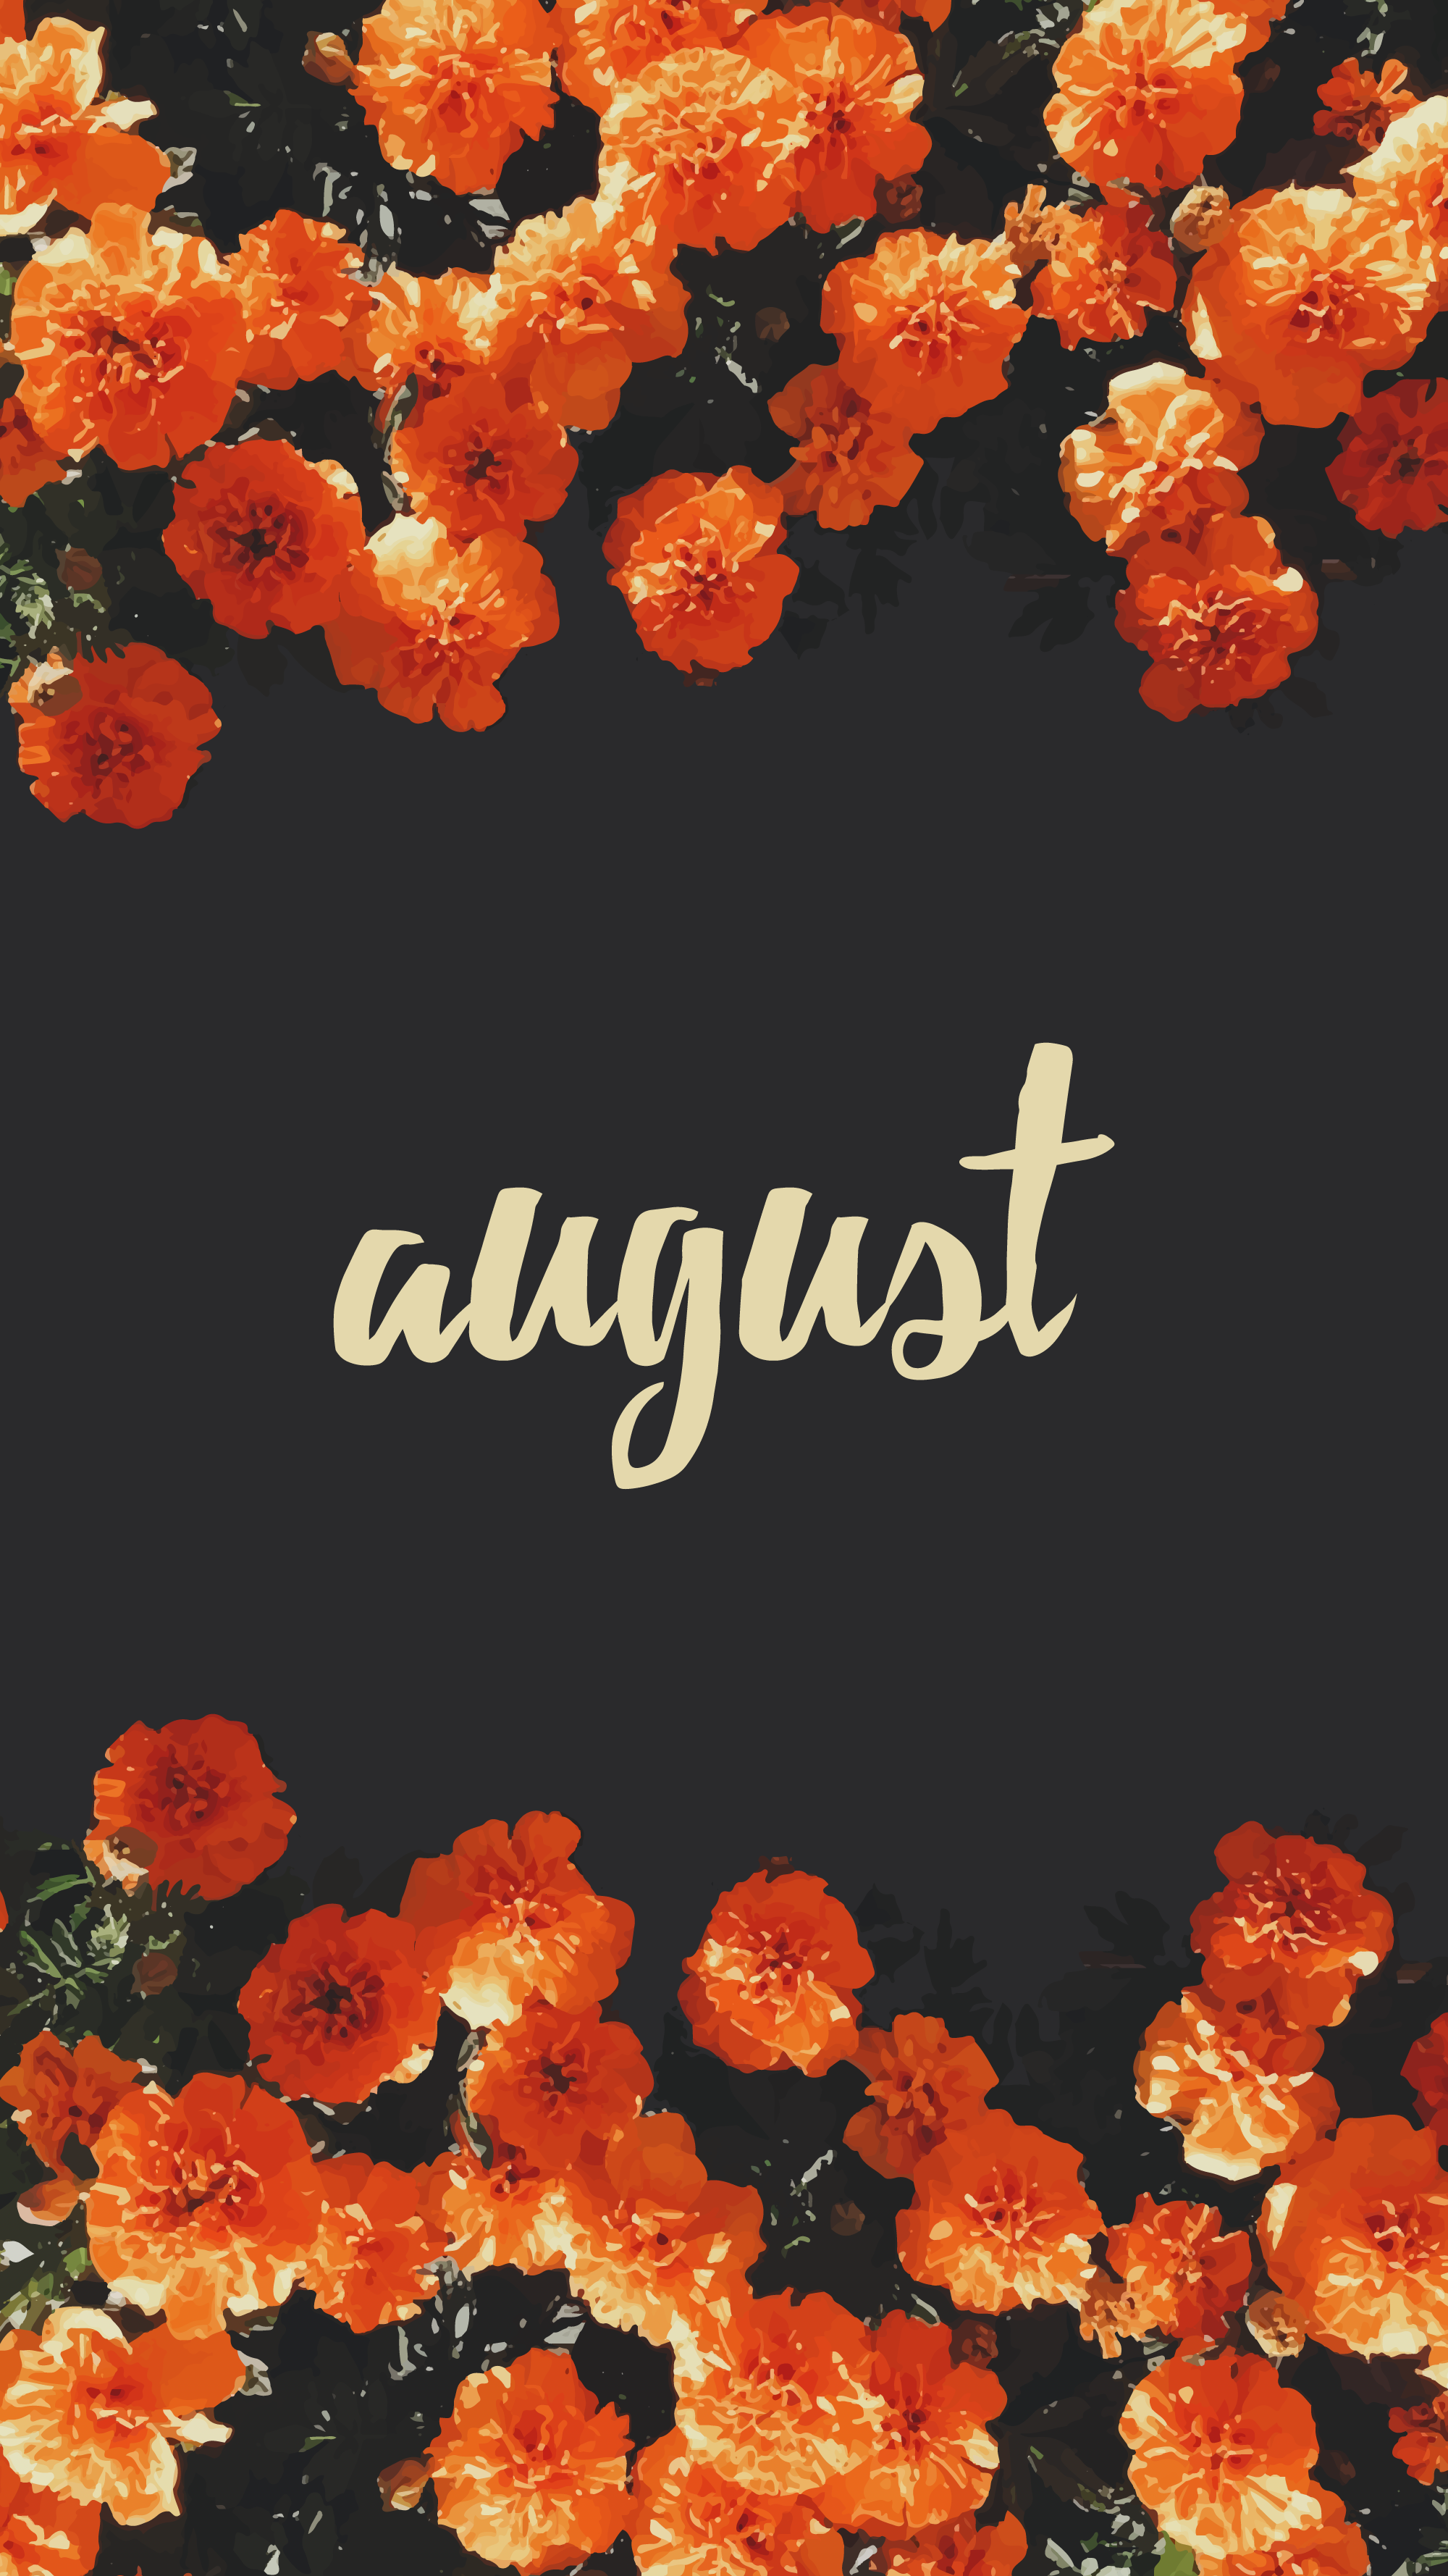 August 2017 calendar wallpaper for desktop background